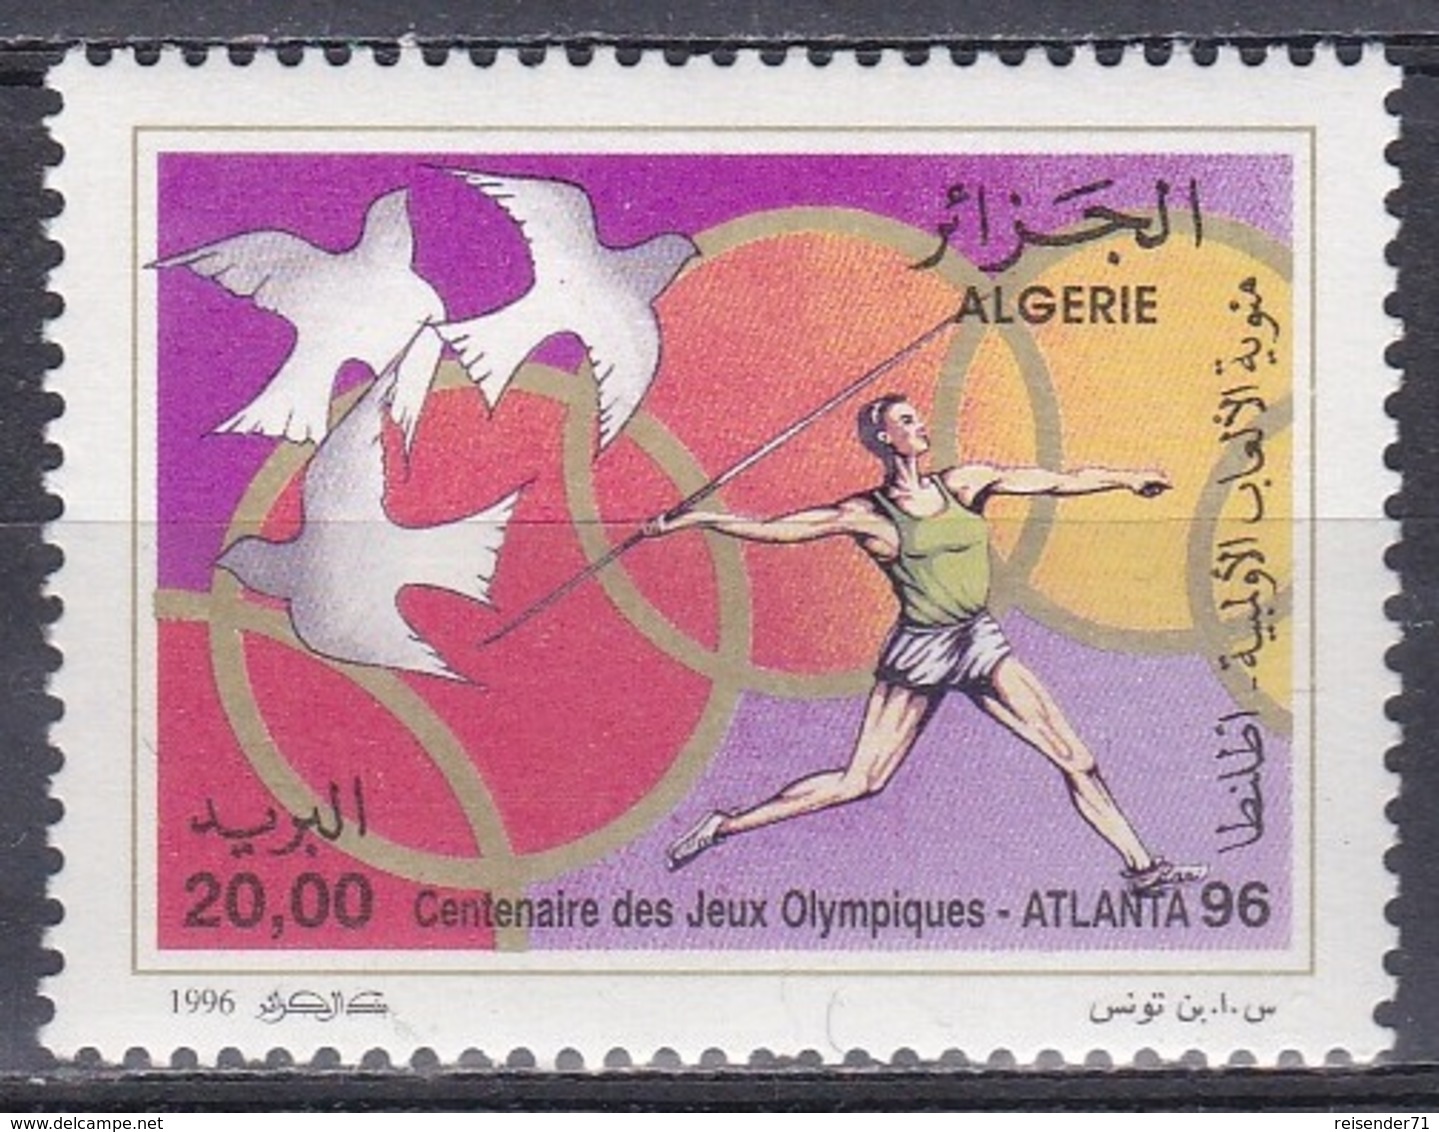 Algerien Algeria 1996, Sport Spiele Olympia Olympics Atlanta Friedenstauben Tauben Doves Speerwerfen, Mi. 1149 ** - Algerien (1962-...)